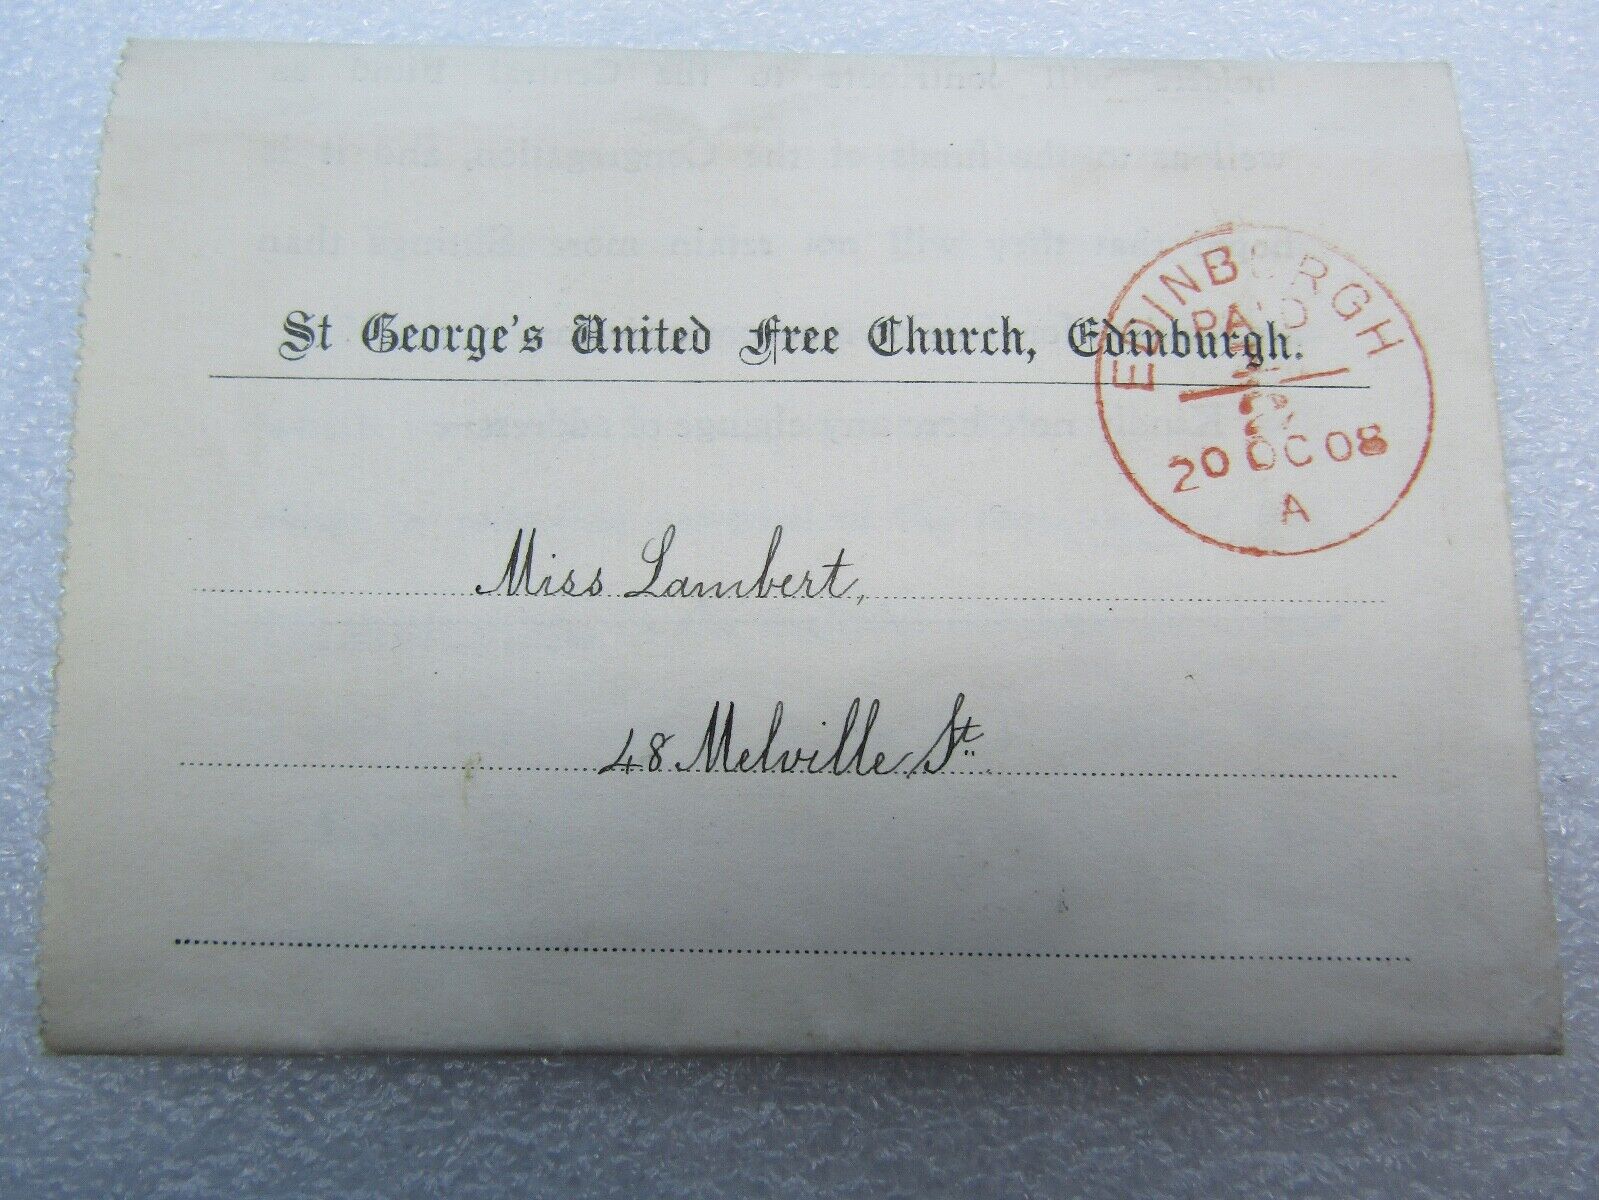 1908-9 ST. GEORGE'S UNITED FREE CHURCH, EDINBURGH - NOTICE TO SEATHOLDERS LETTER